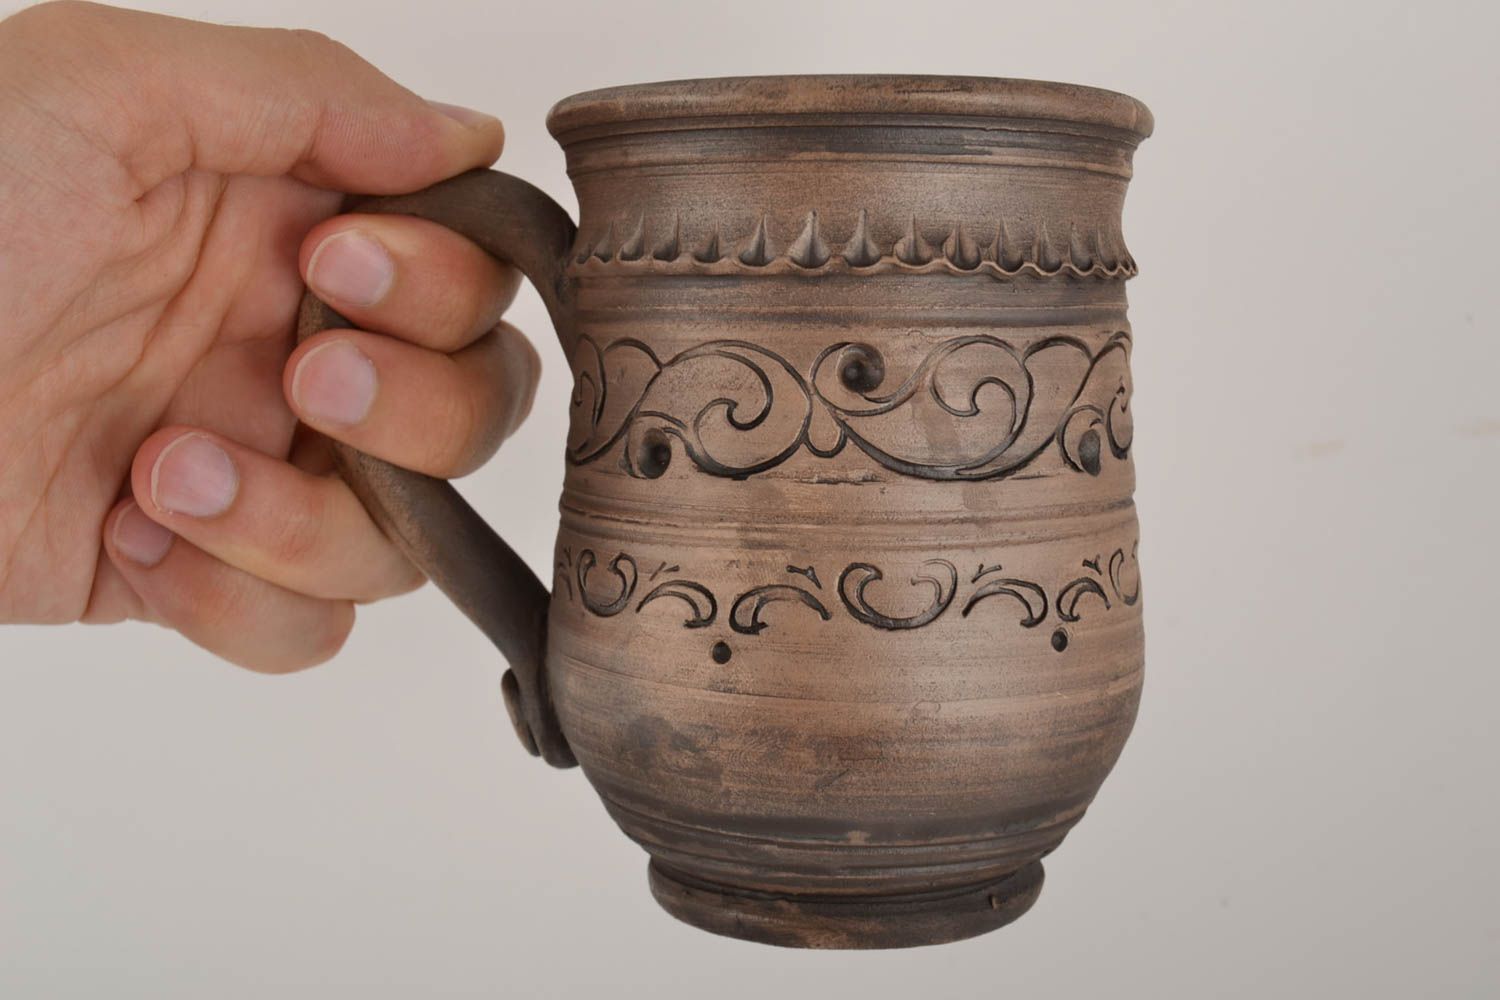 Extra-large 16 oz clay Italian-style coffee mug with handle photo 4